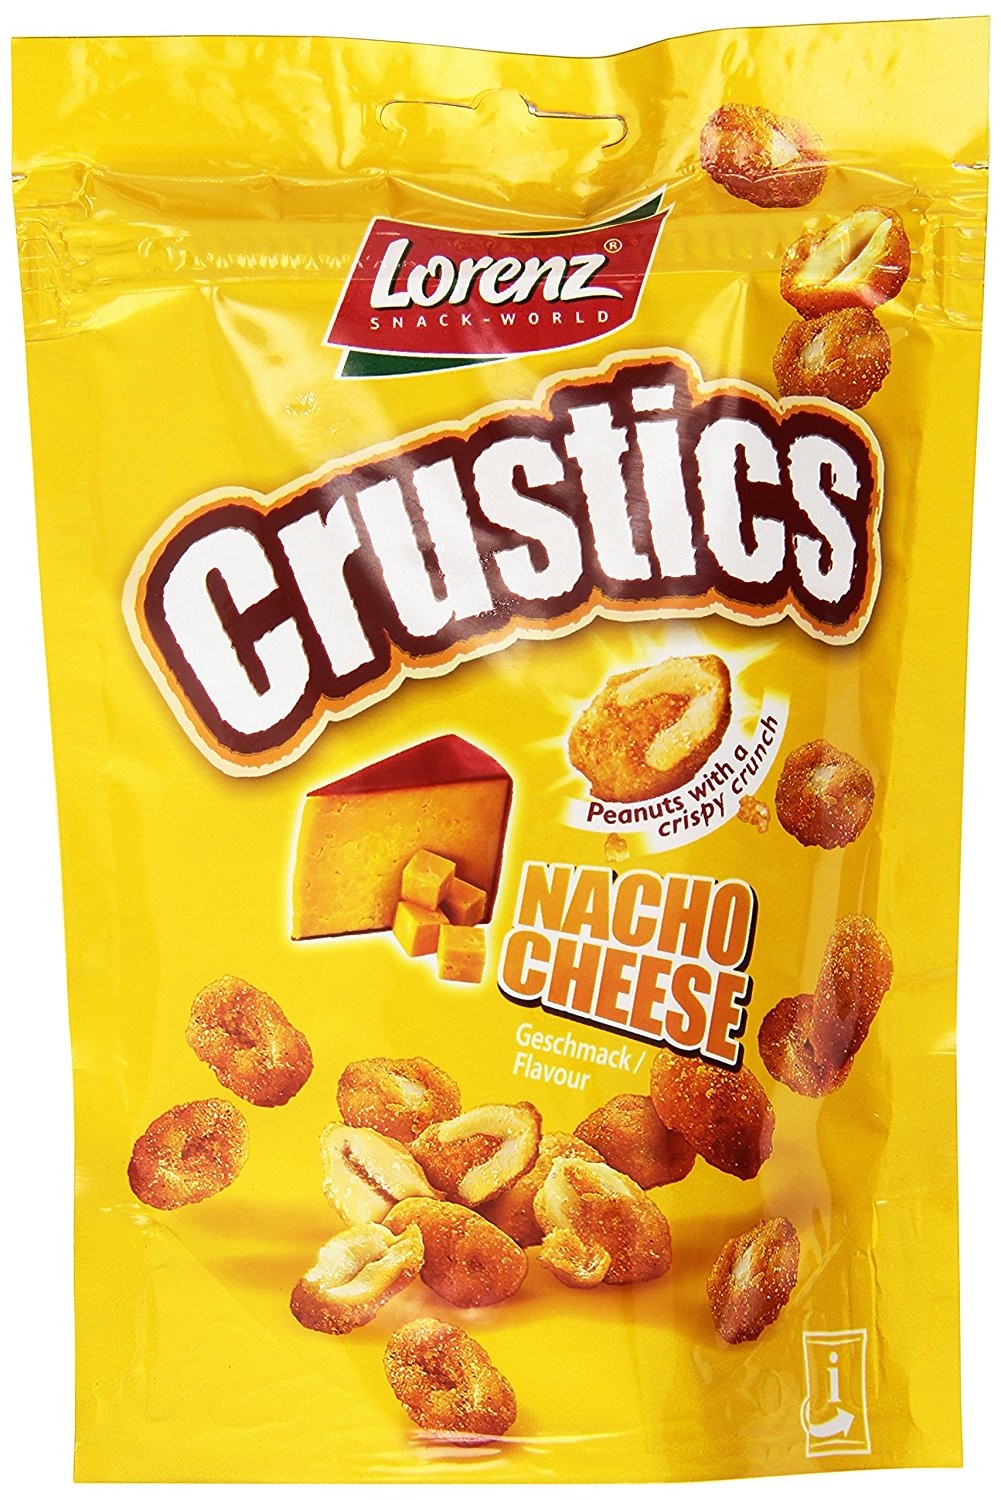 Crustics Nacho Cheese 110g Lorenz